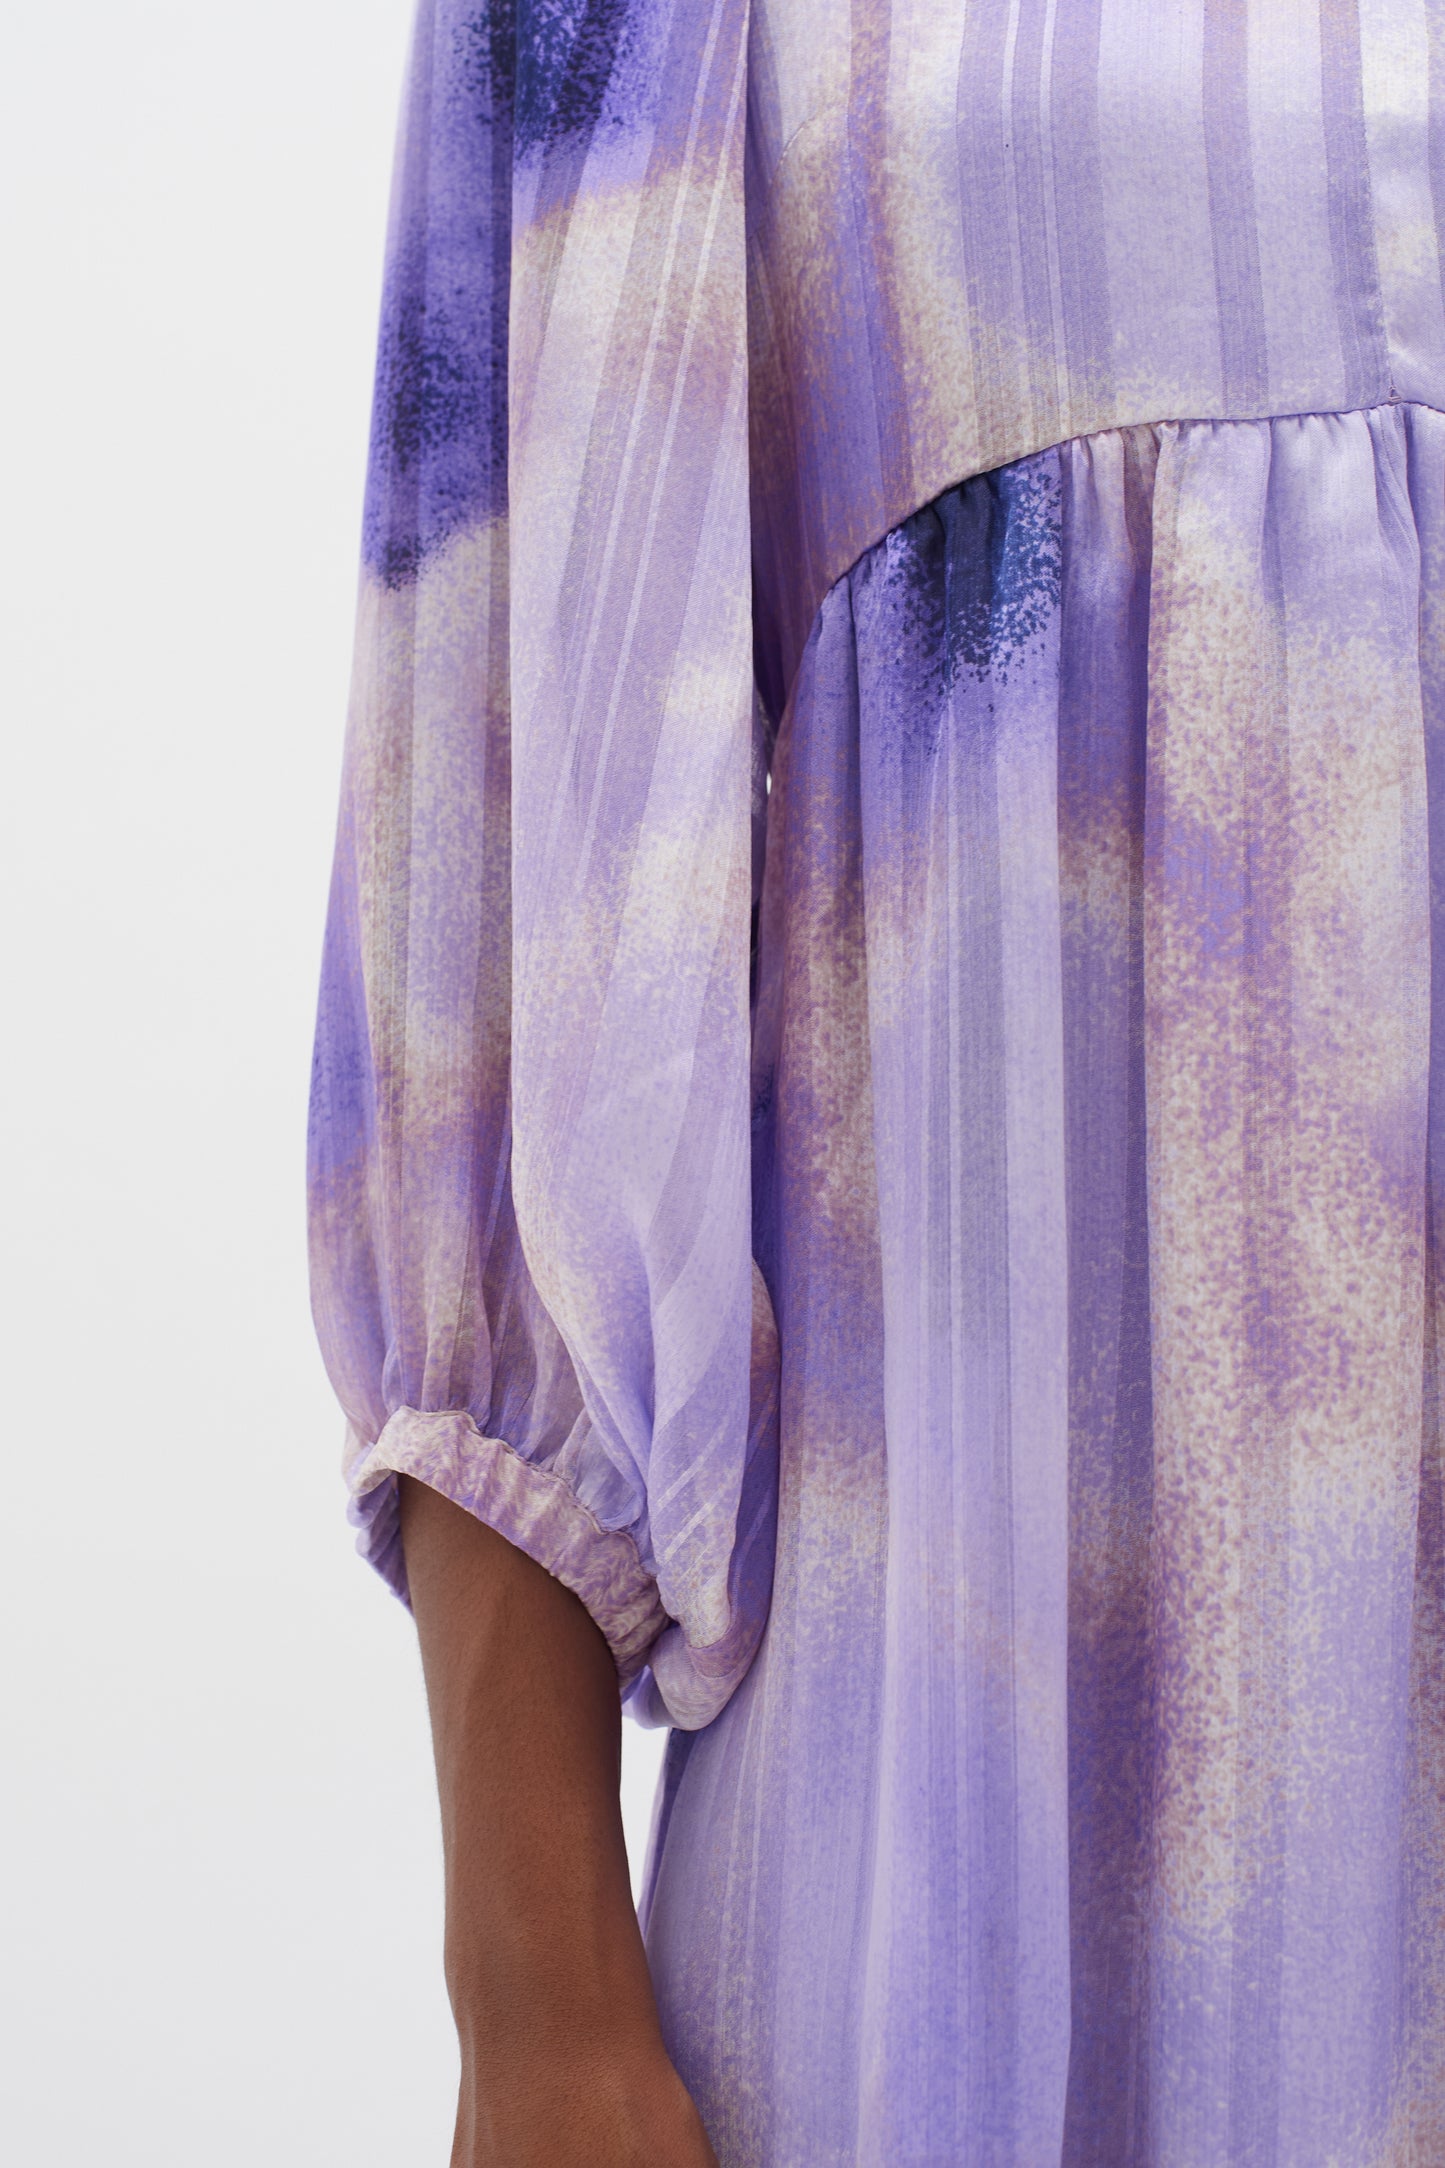 Himarilw Dress in Lavender